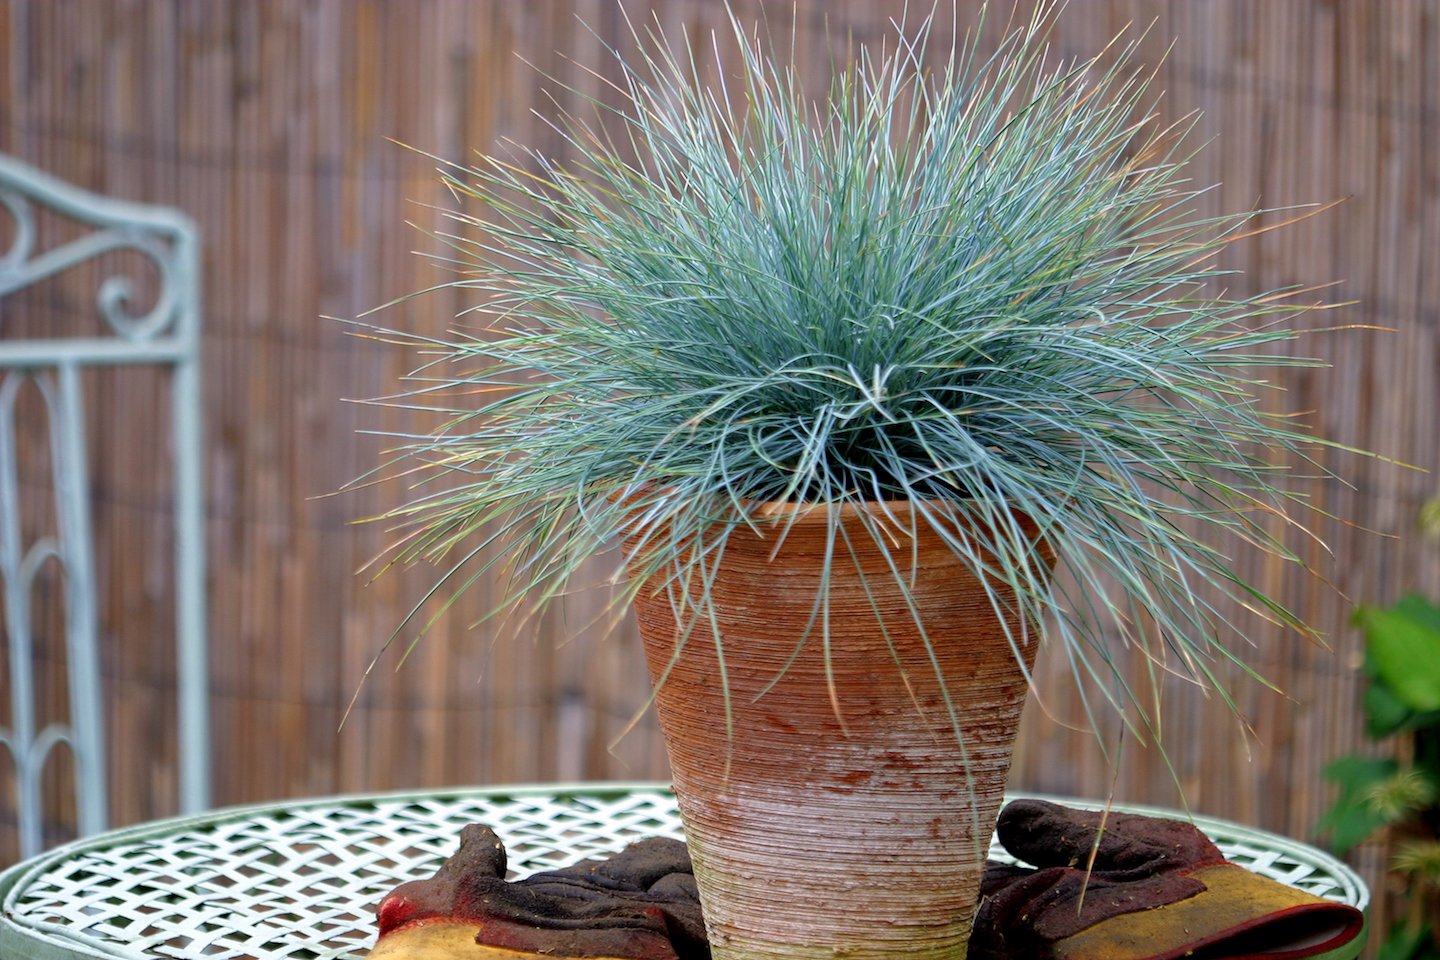 ornamental grass Festuca Elijah Blue in a terracotta pot